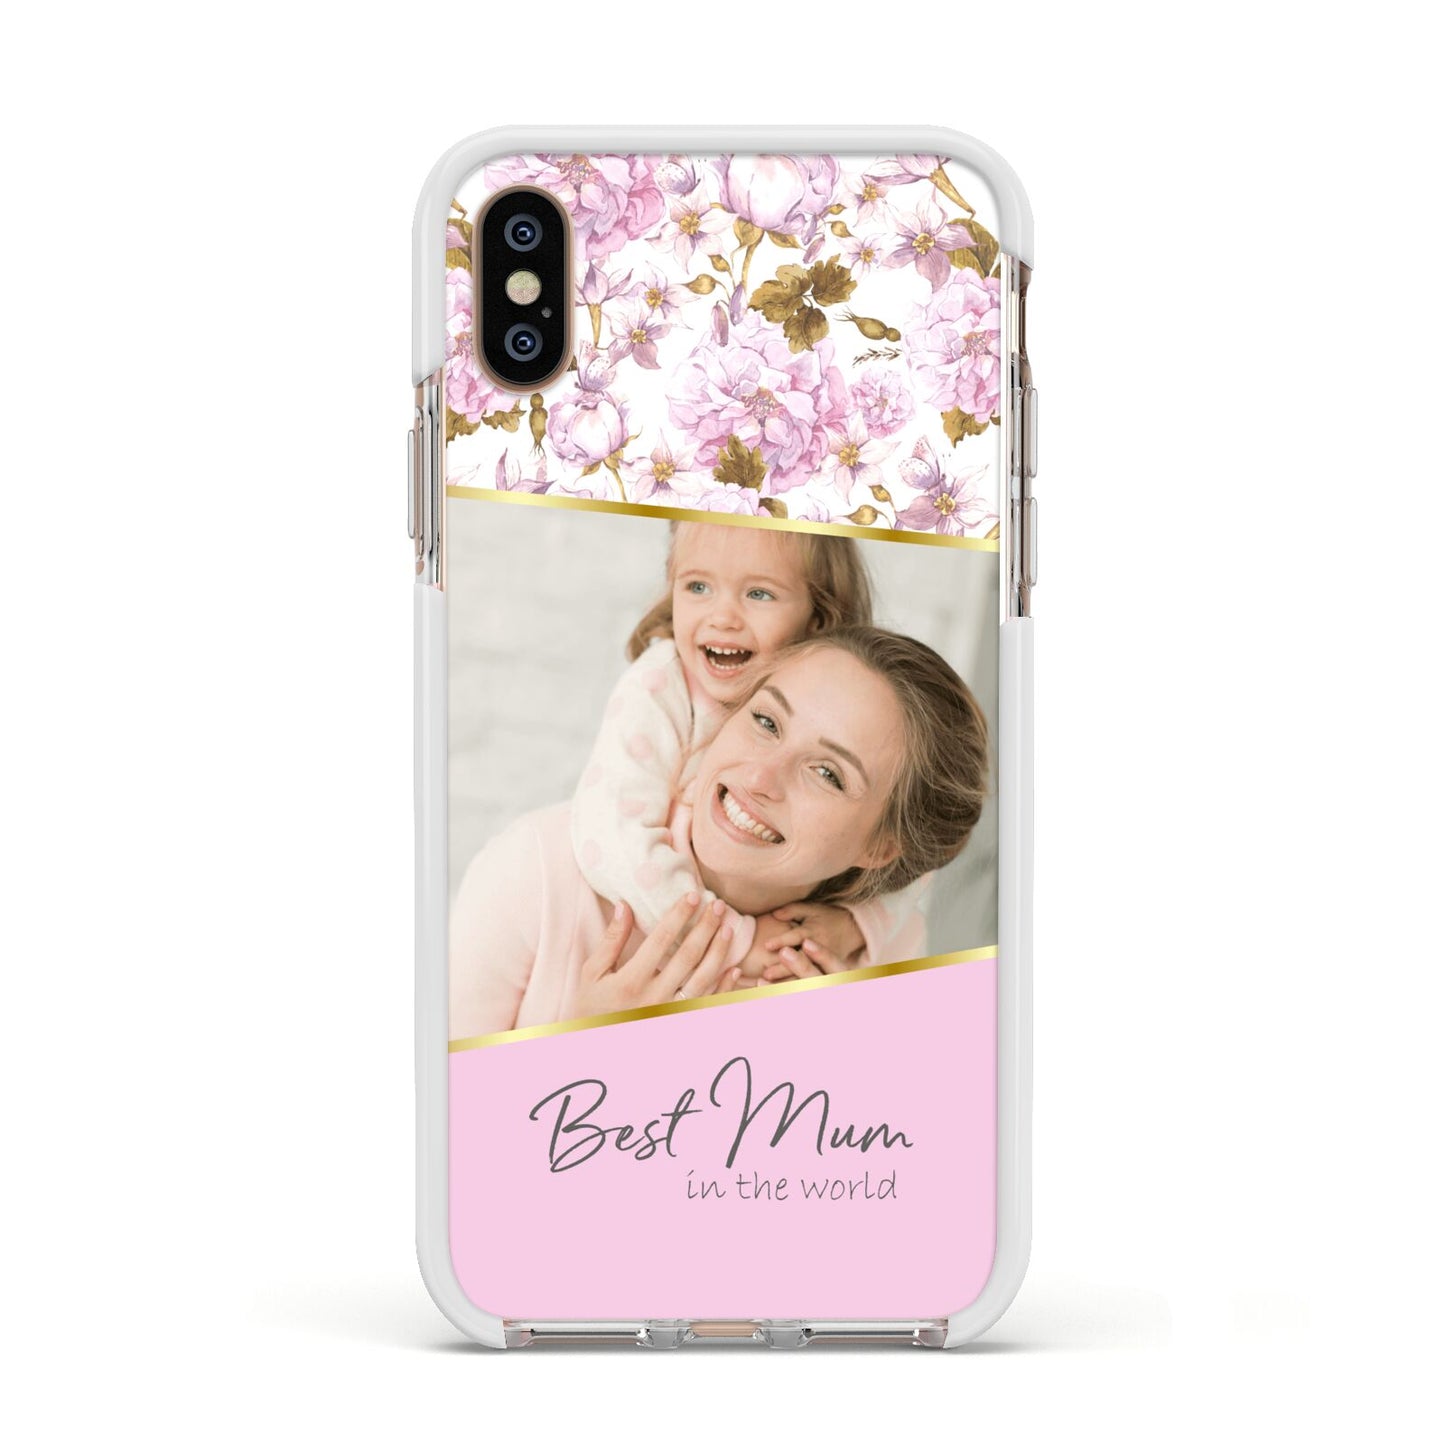 Personalised Love You Mum Apple iPhone Xs Impact Case White Edge on Gold Phone